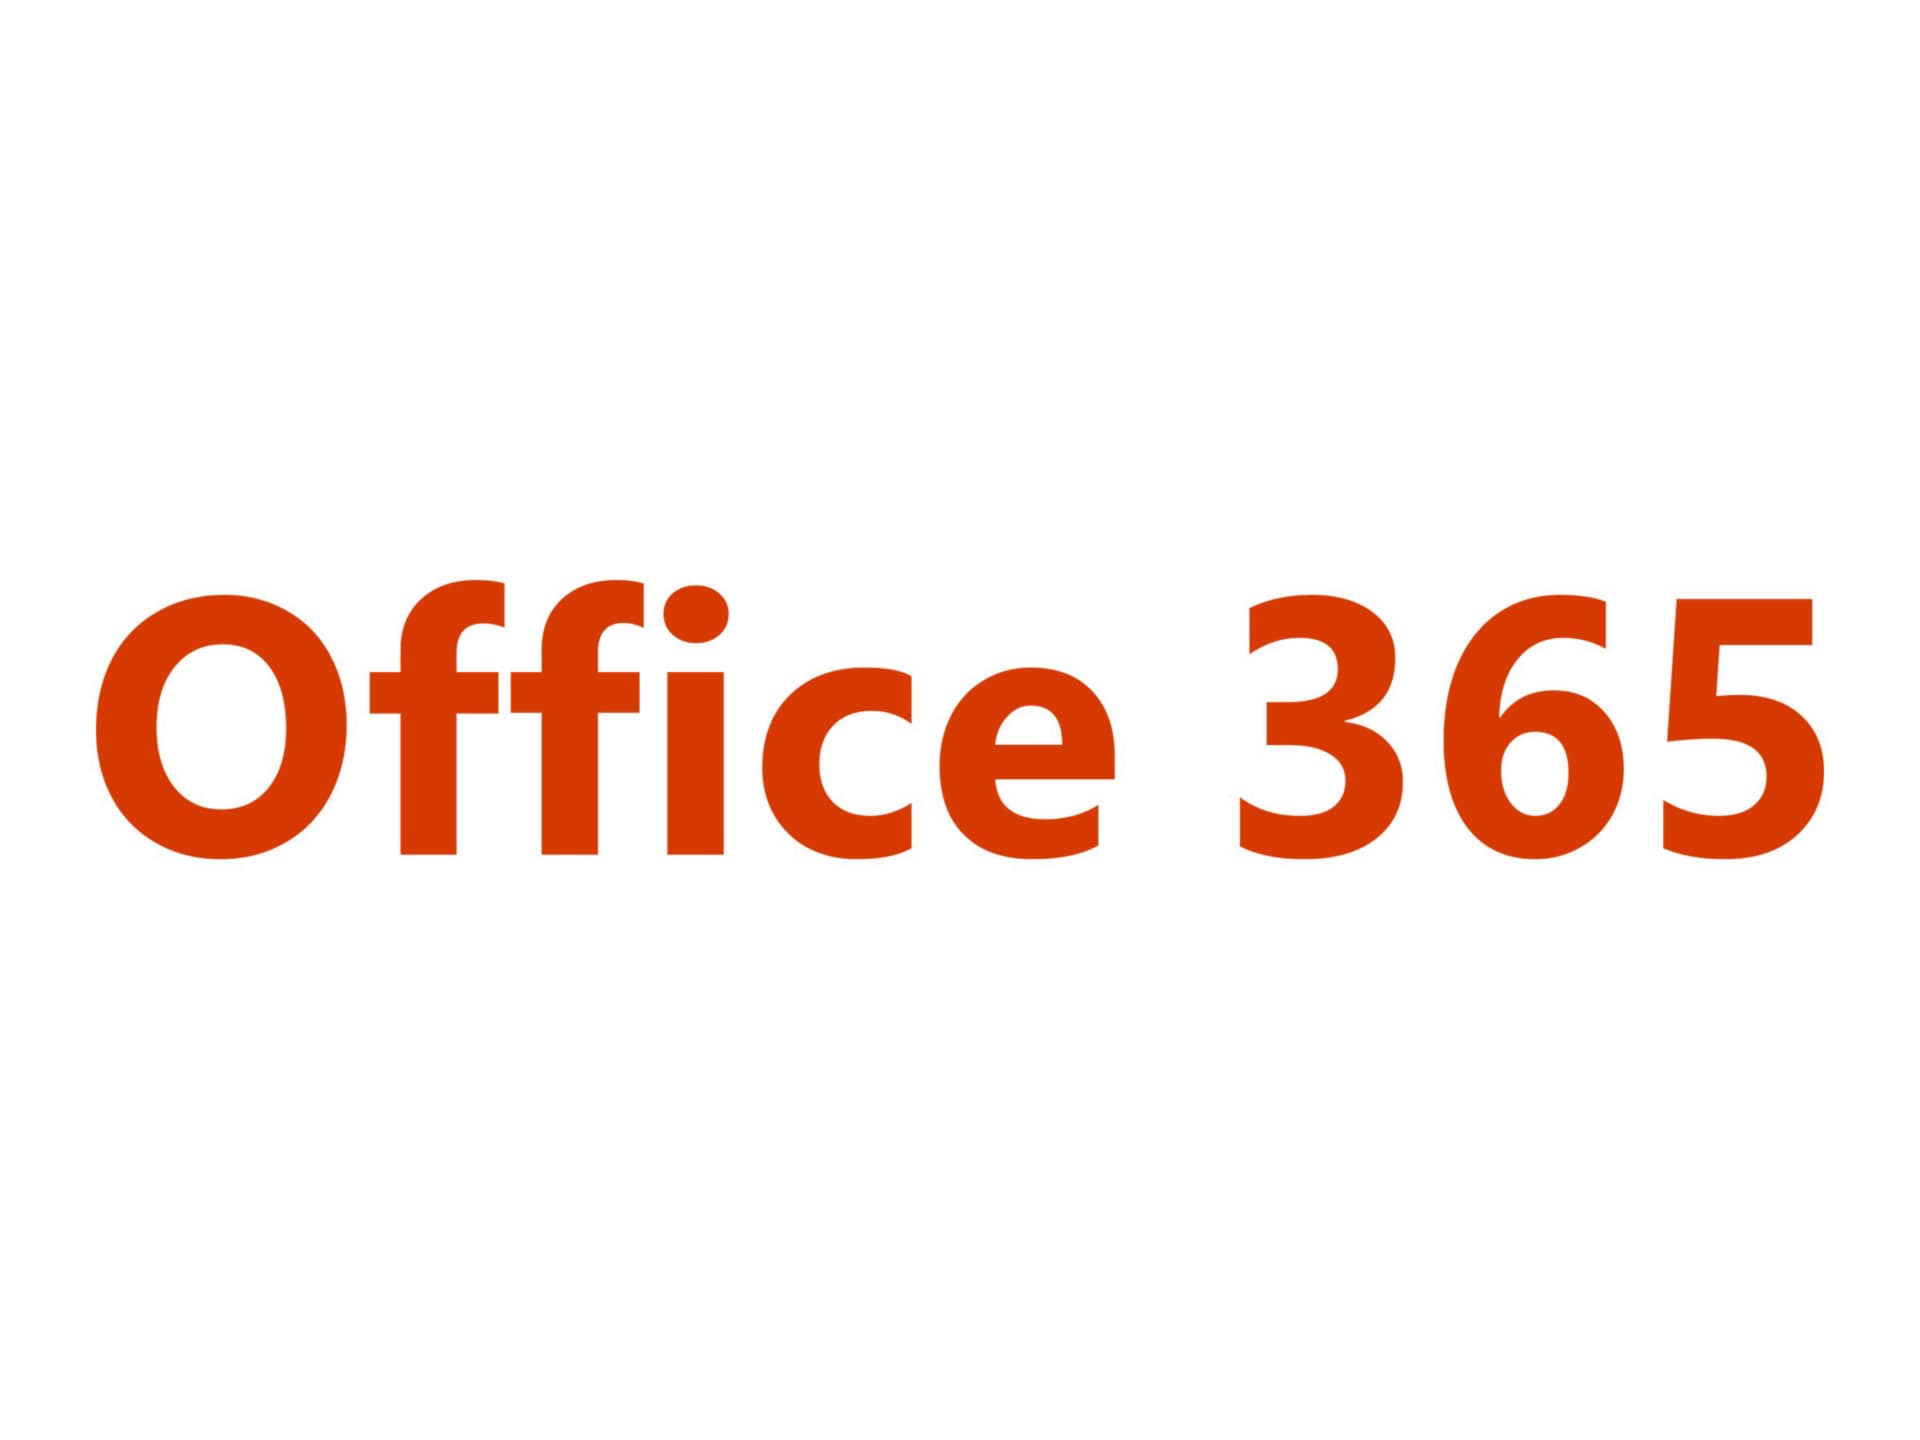 Microsoft Office 365 Enterprise F3 - subscription license (1 month) - 1 user